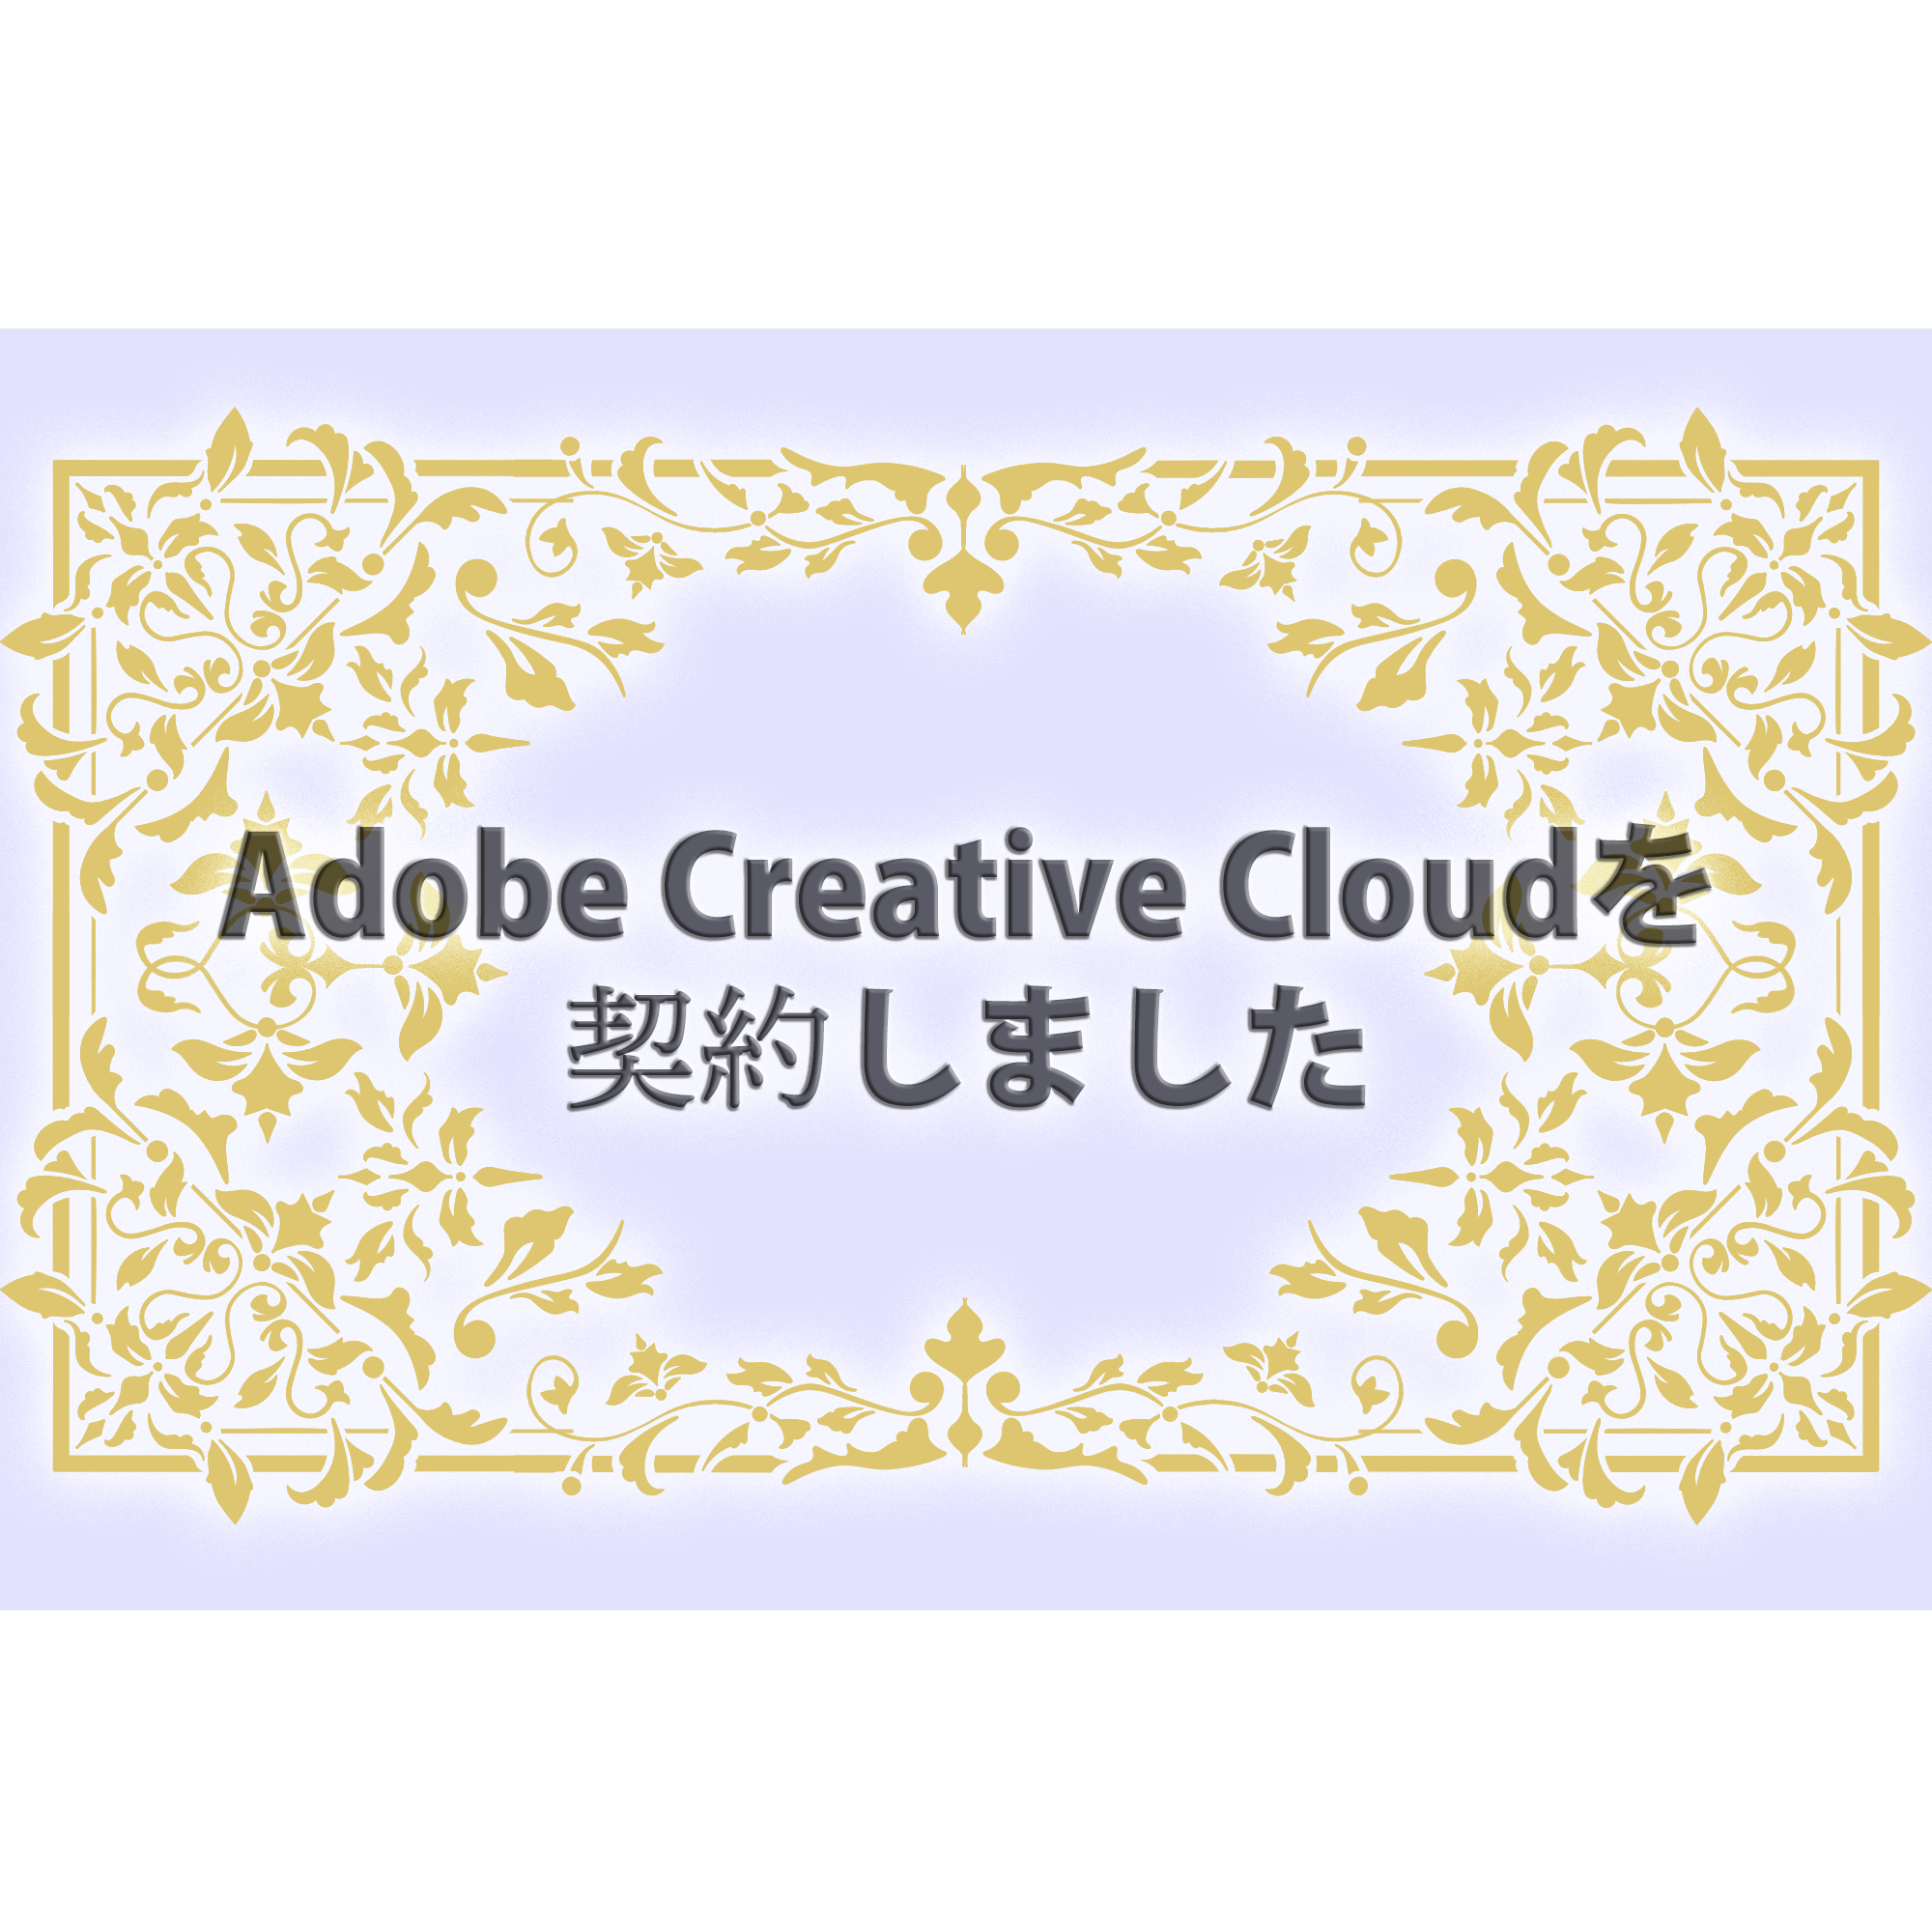 Adobe Creative Cloudを契約した話